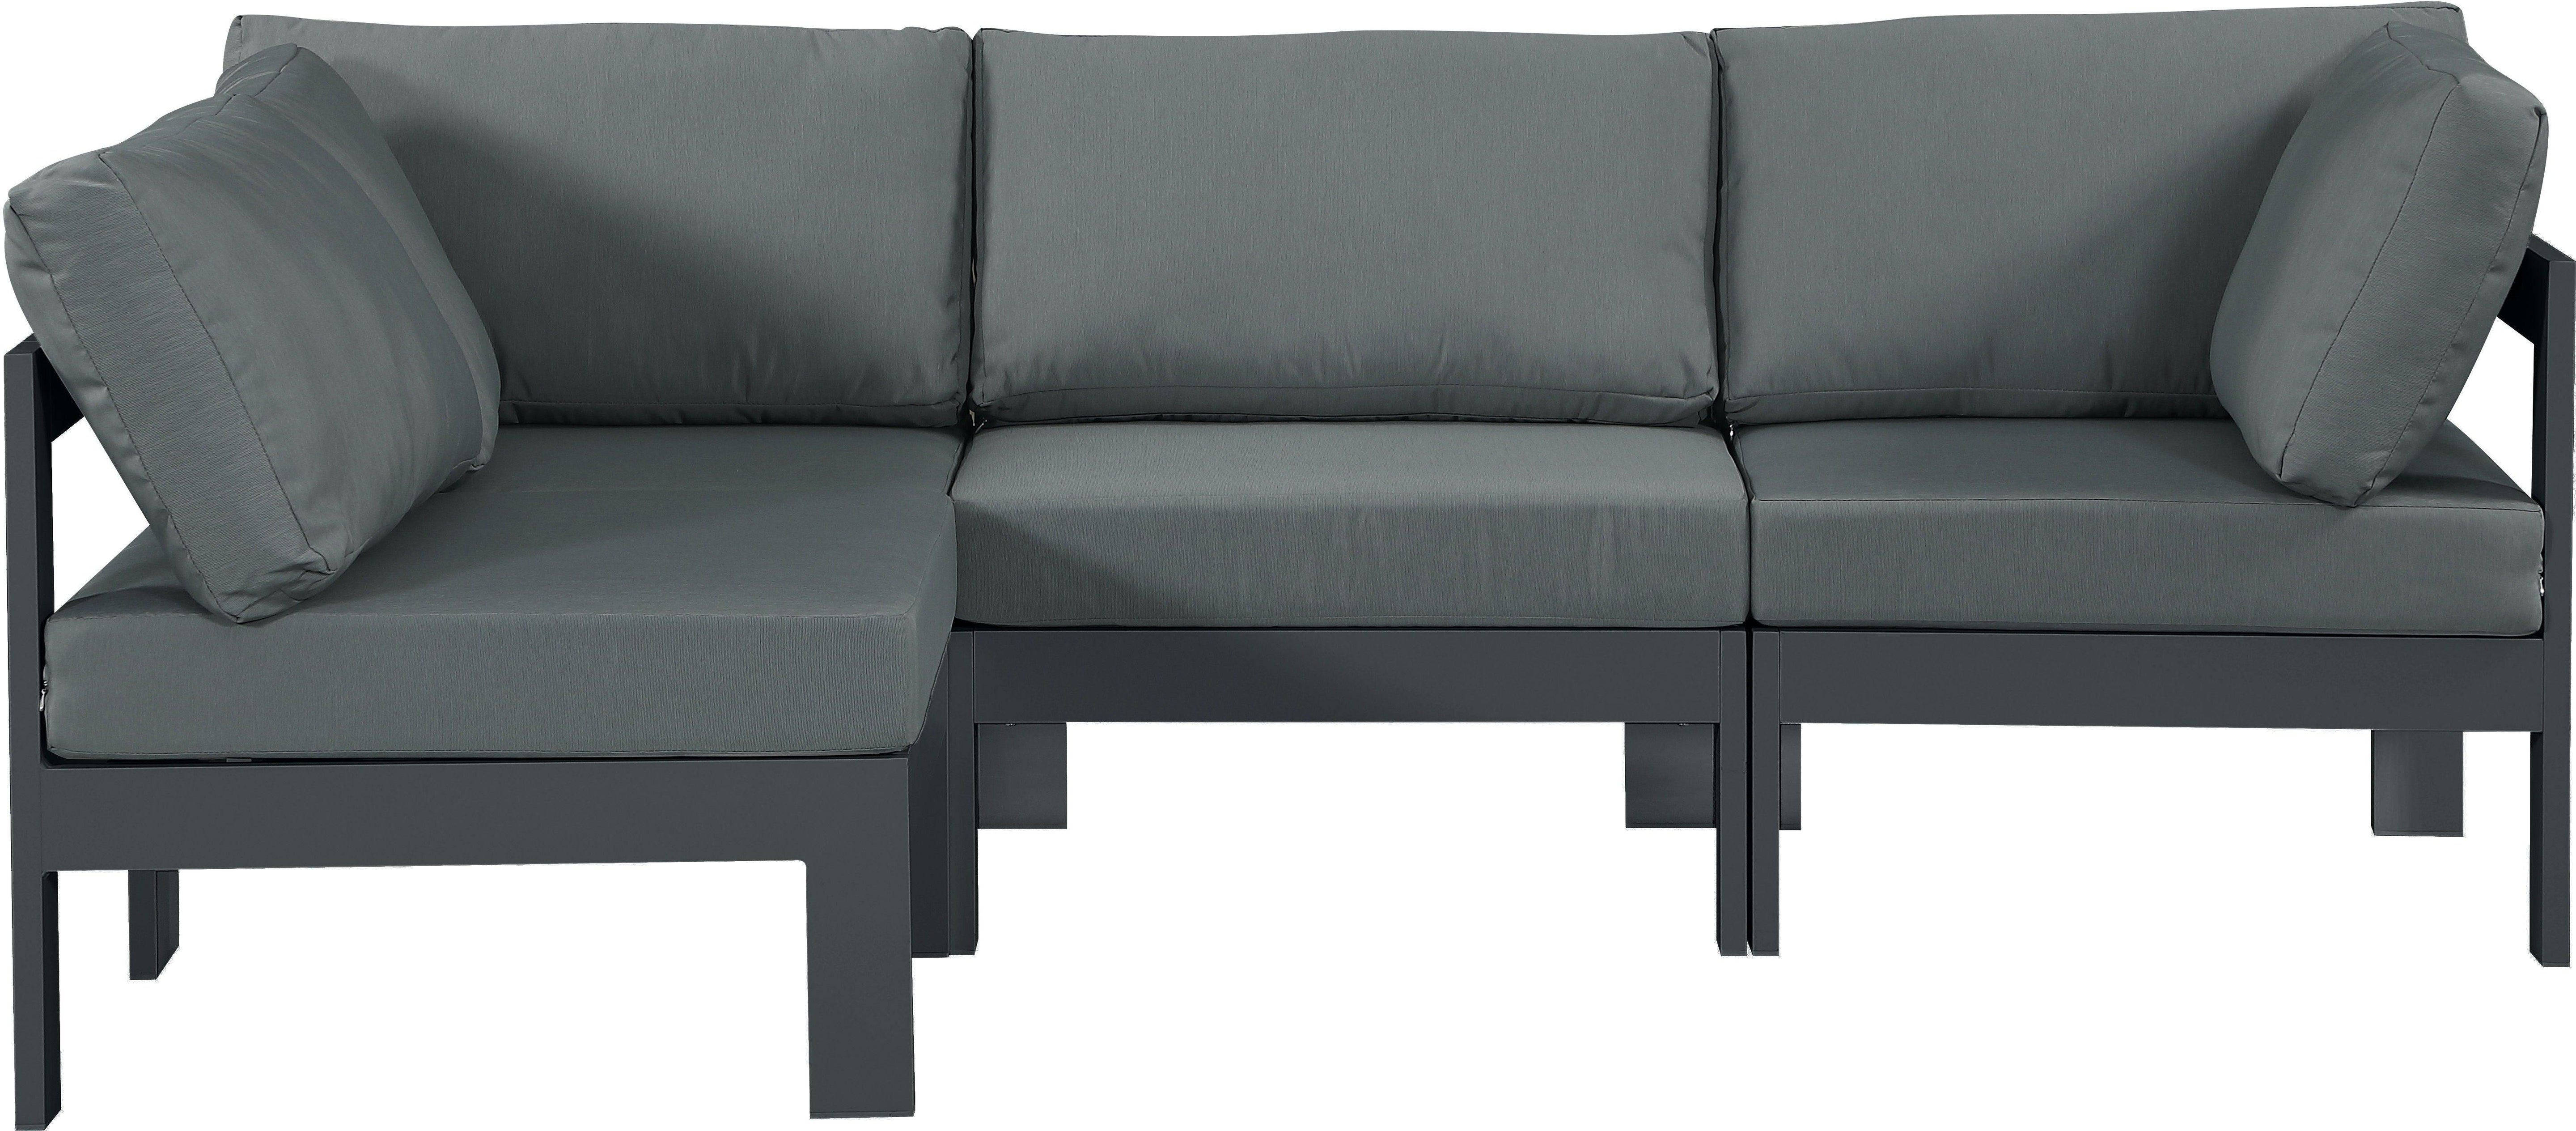 Meridian Furniture - Nizuc - Outdoor Patio Modular Sectional 4 Piece - Grey - 5th Avenue Furniture